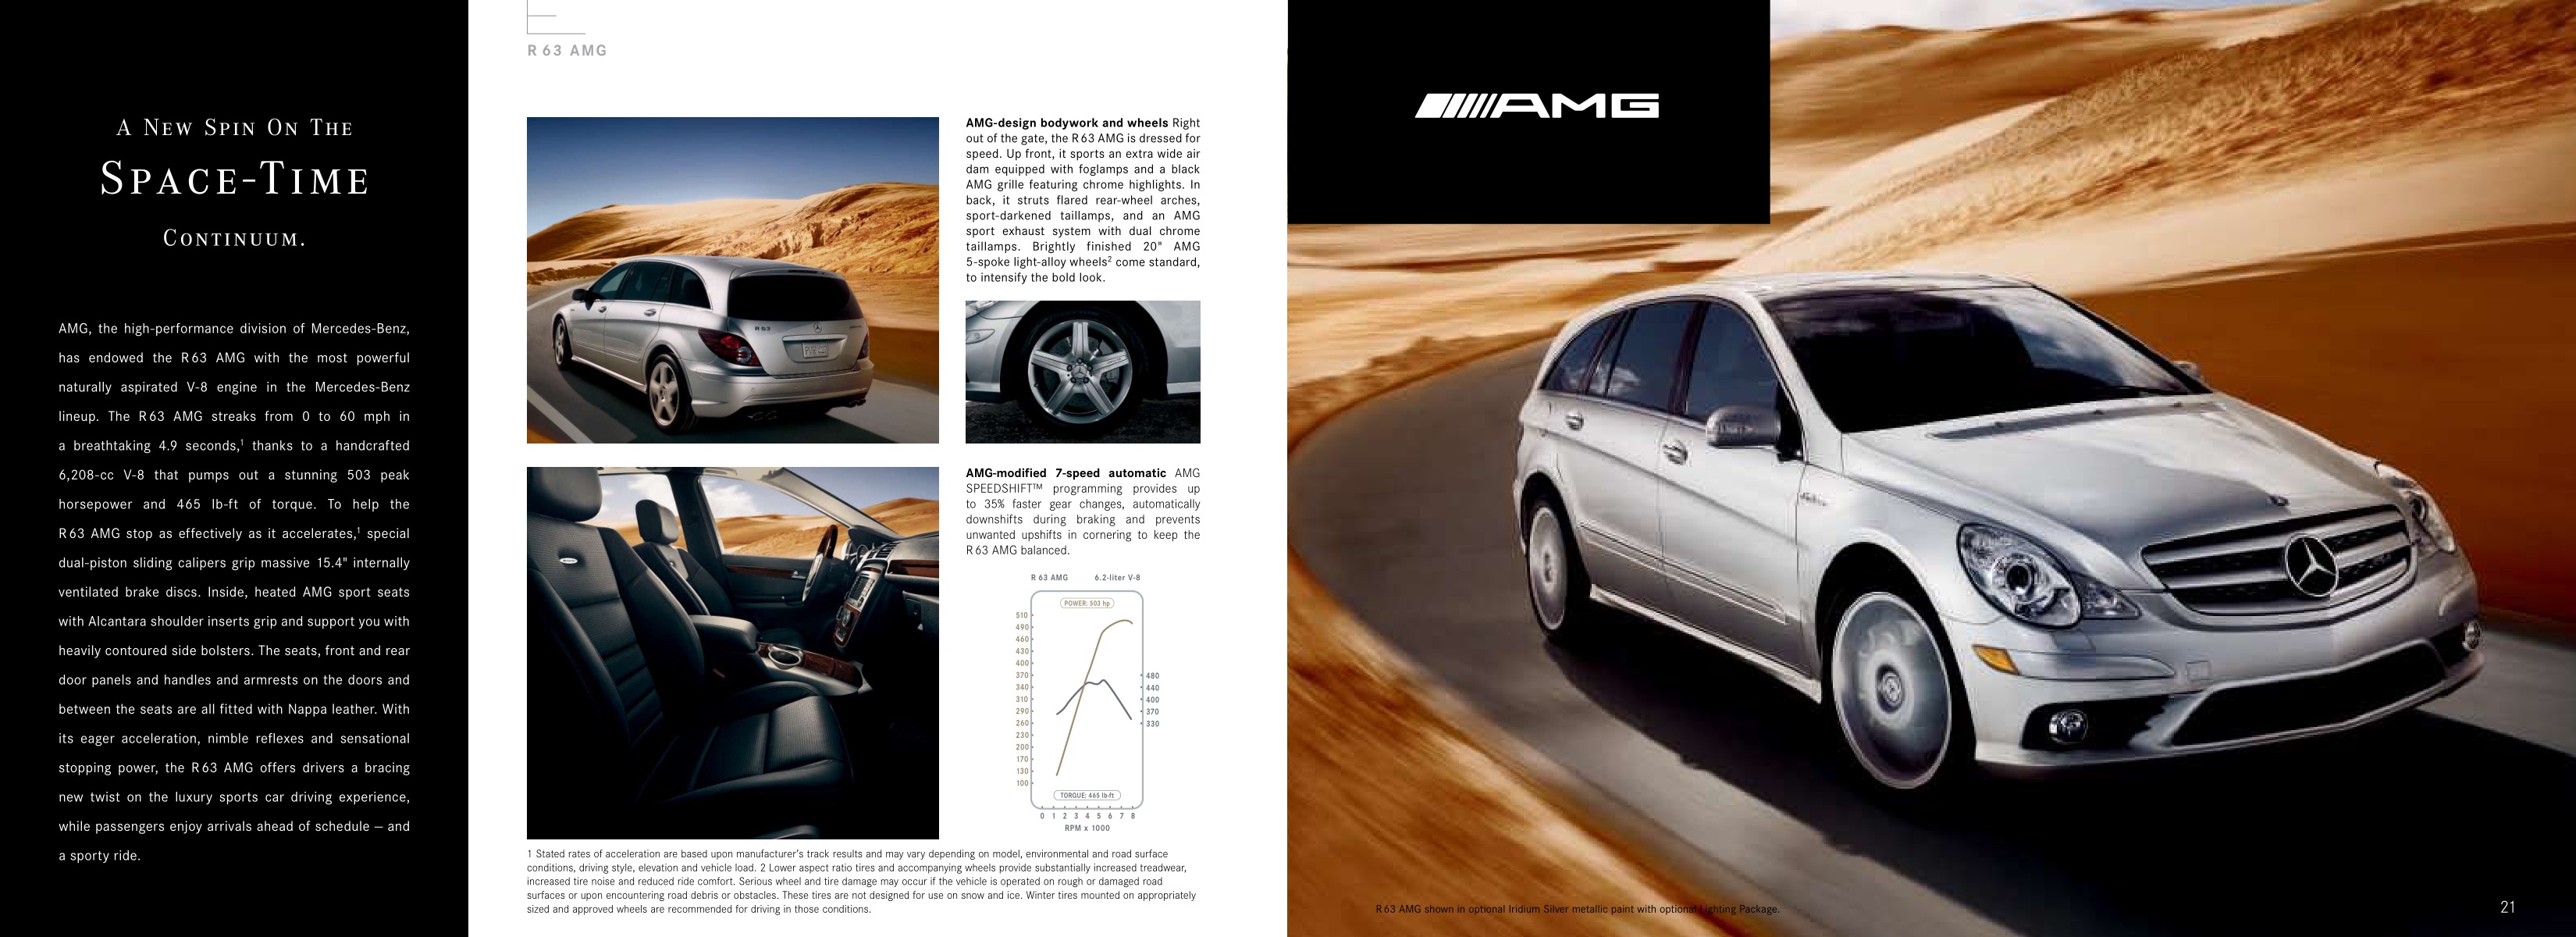 2007 Mercedes-Benz R-Class Brochure Page 3